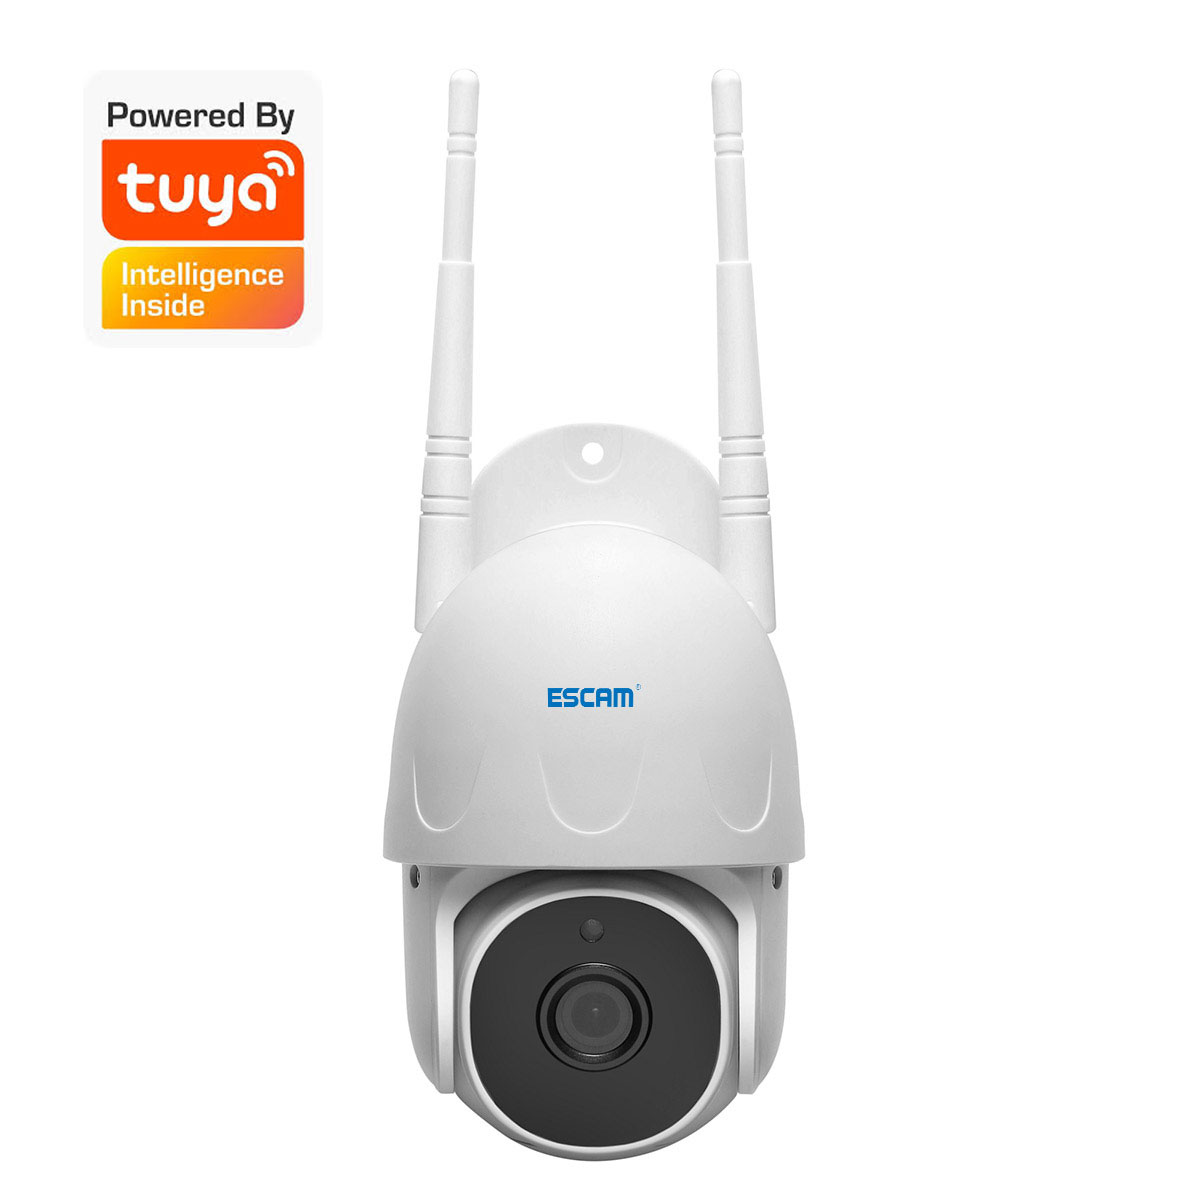 ESCAM-TY100-Tuya-H265-WiFi-IP-Camera-1080P-PanTilt-Outdoor--Two-Way-Audio-Voice-Alarm-Wifi-Camera-Wa-1823034-13